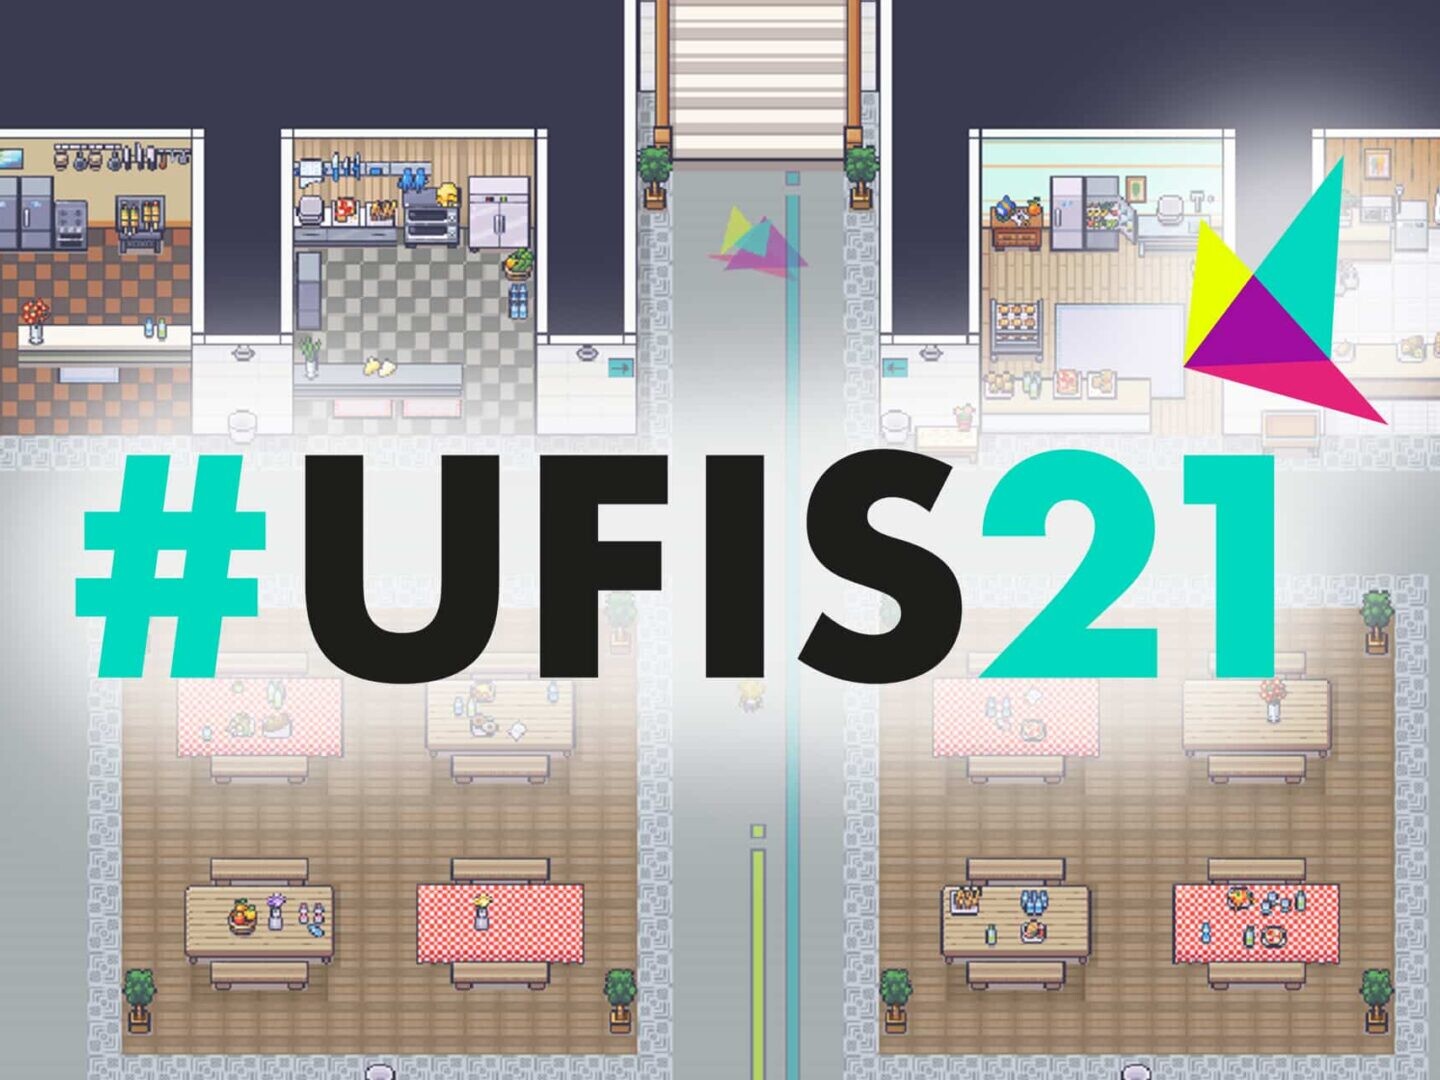 UFIS21 – effizientes Airline-Management-System.